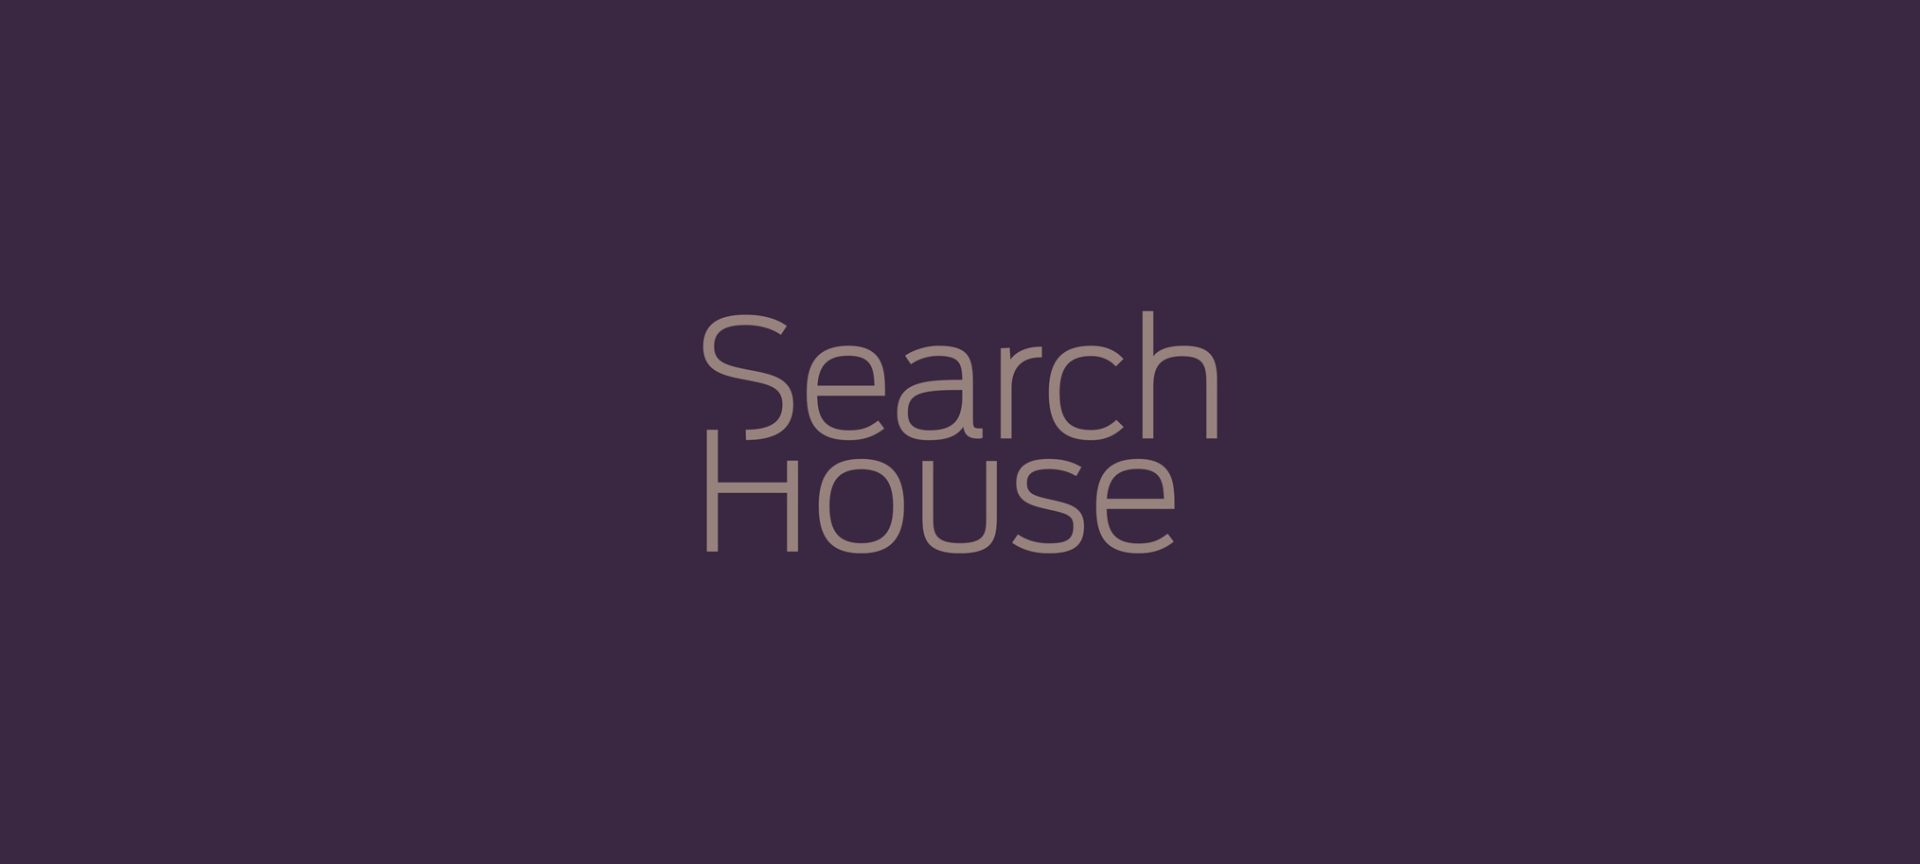 searchhouse_cover